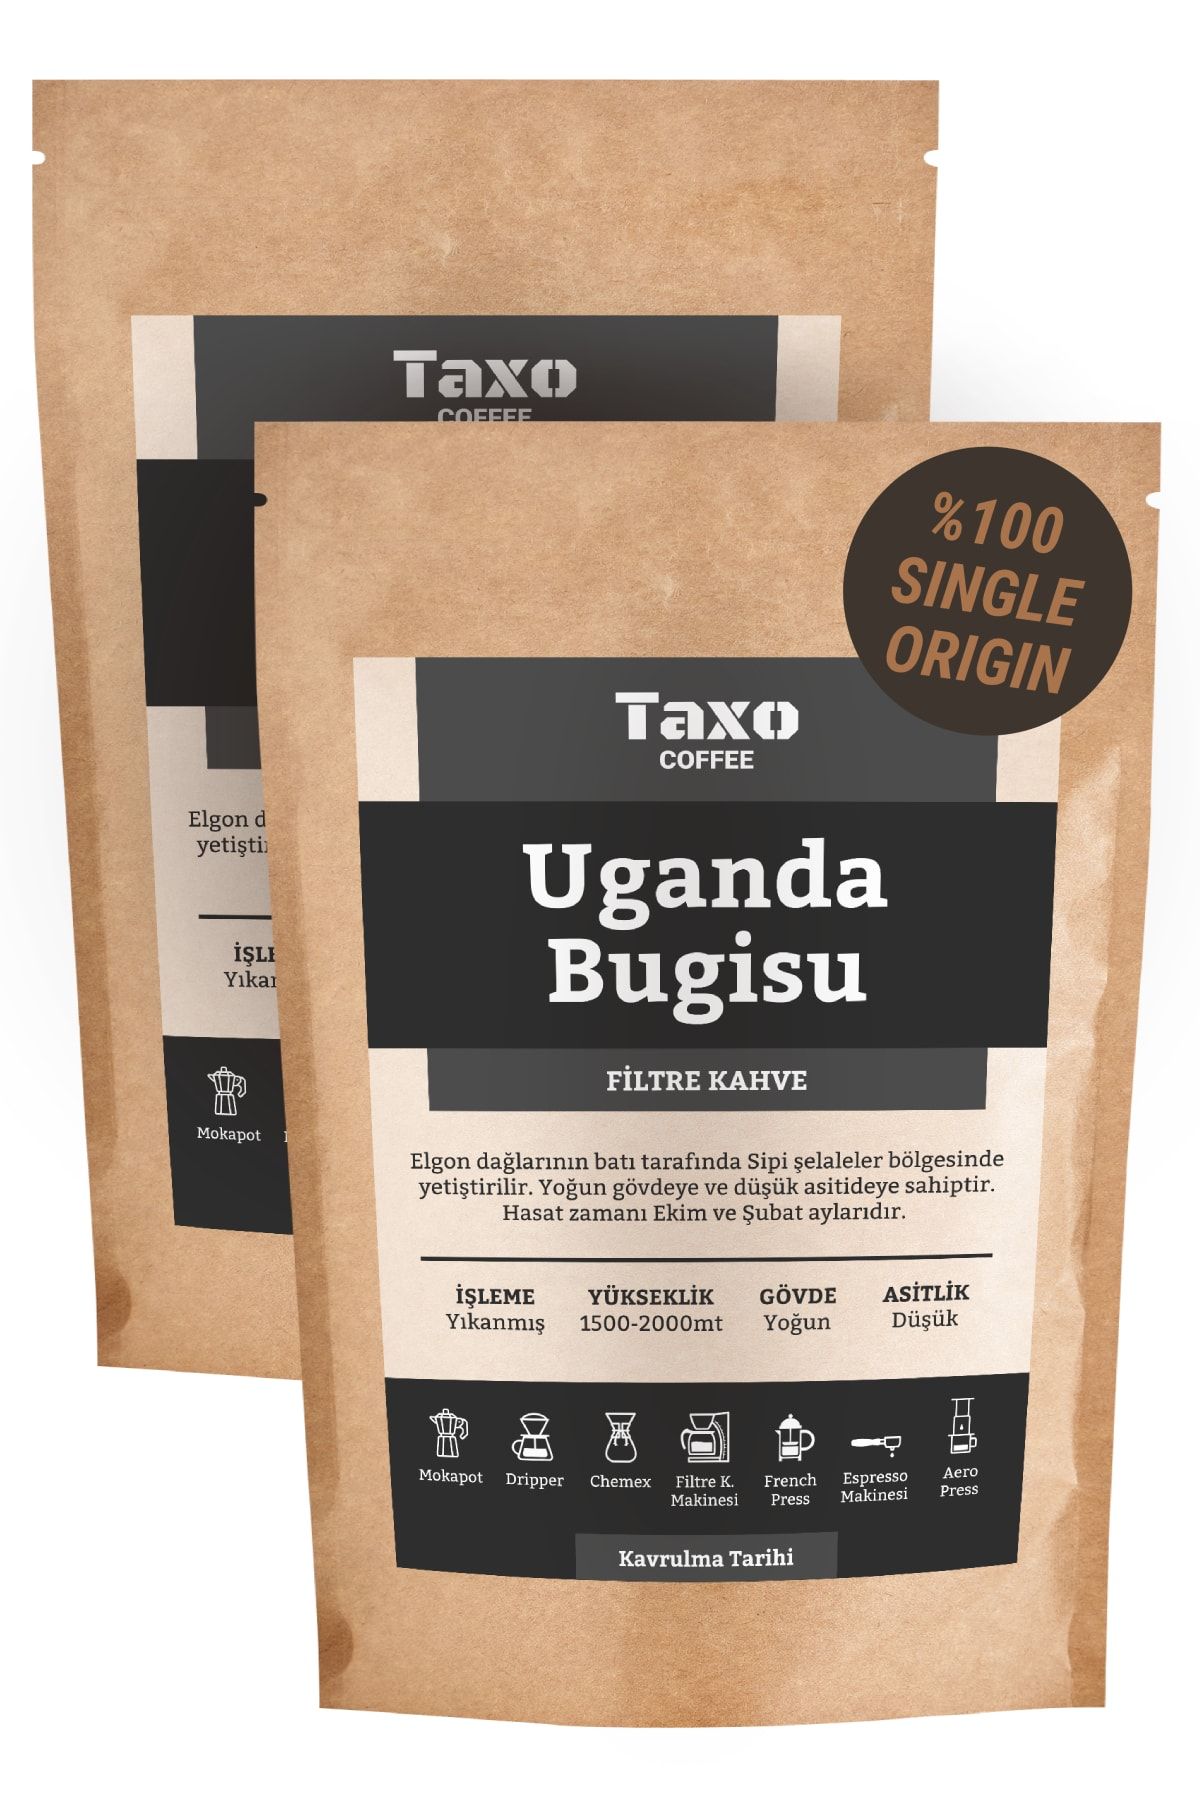 Taxo Coffee Uganda Bugisu 1kg Filtre Kahve